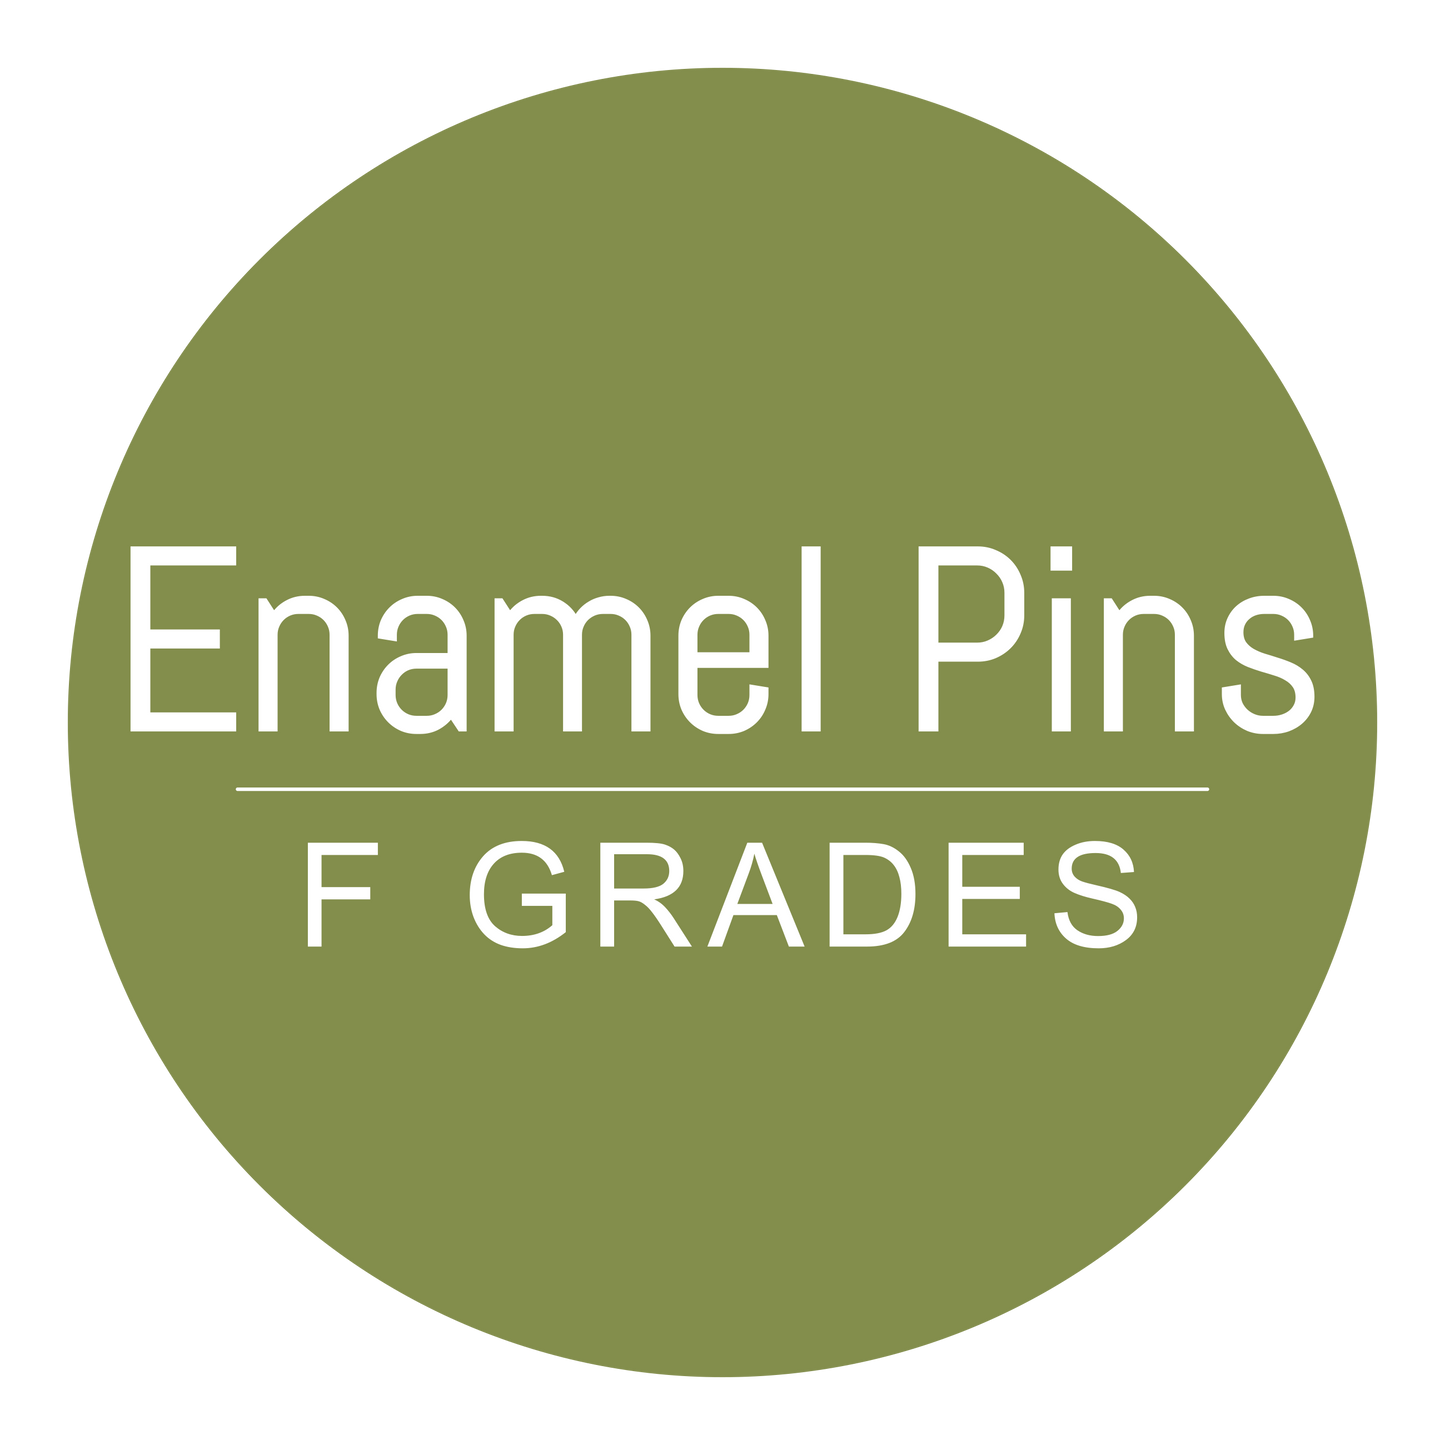 F grades - Enamel pins